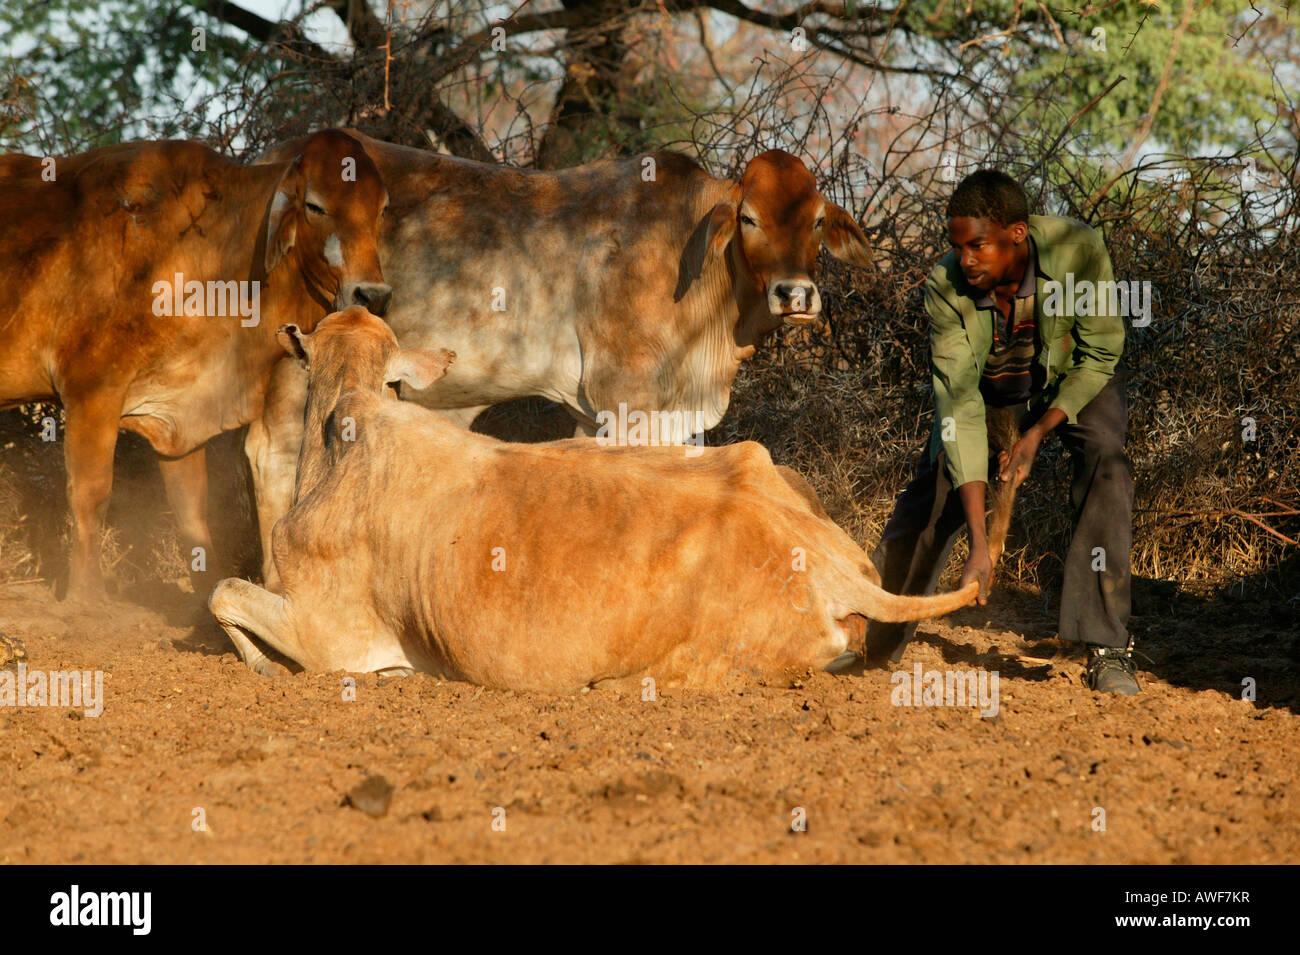 Vacca malata viene trattata, Cattlepost Bothatoga, Botswana, Africa Foto Stock